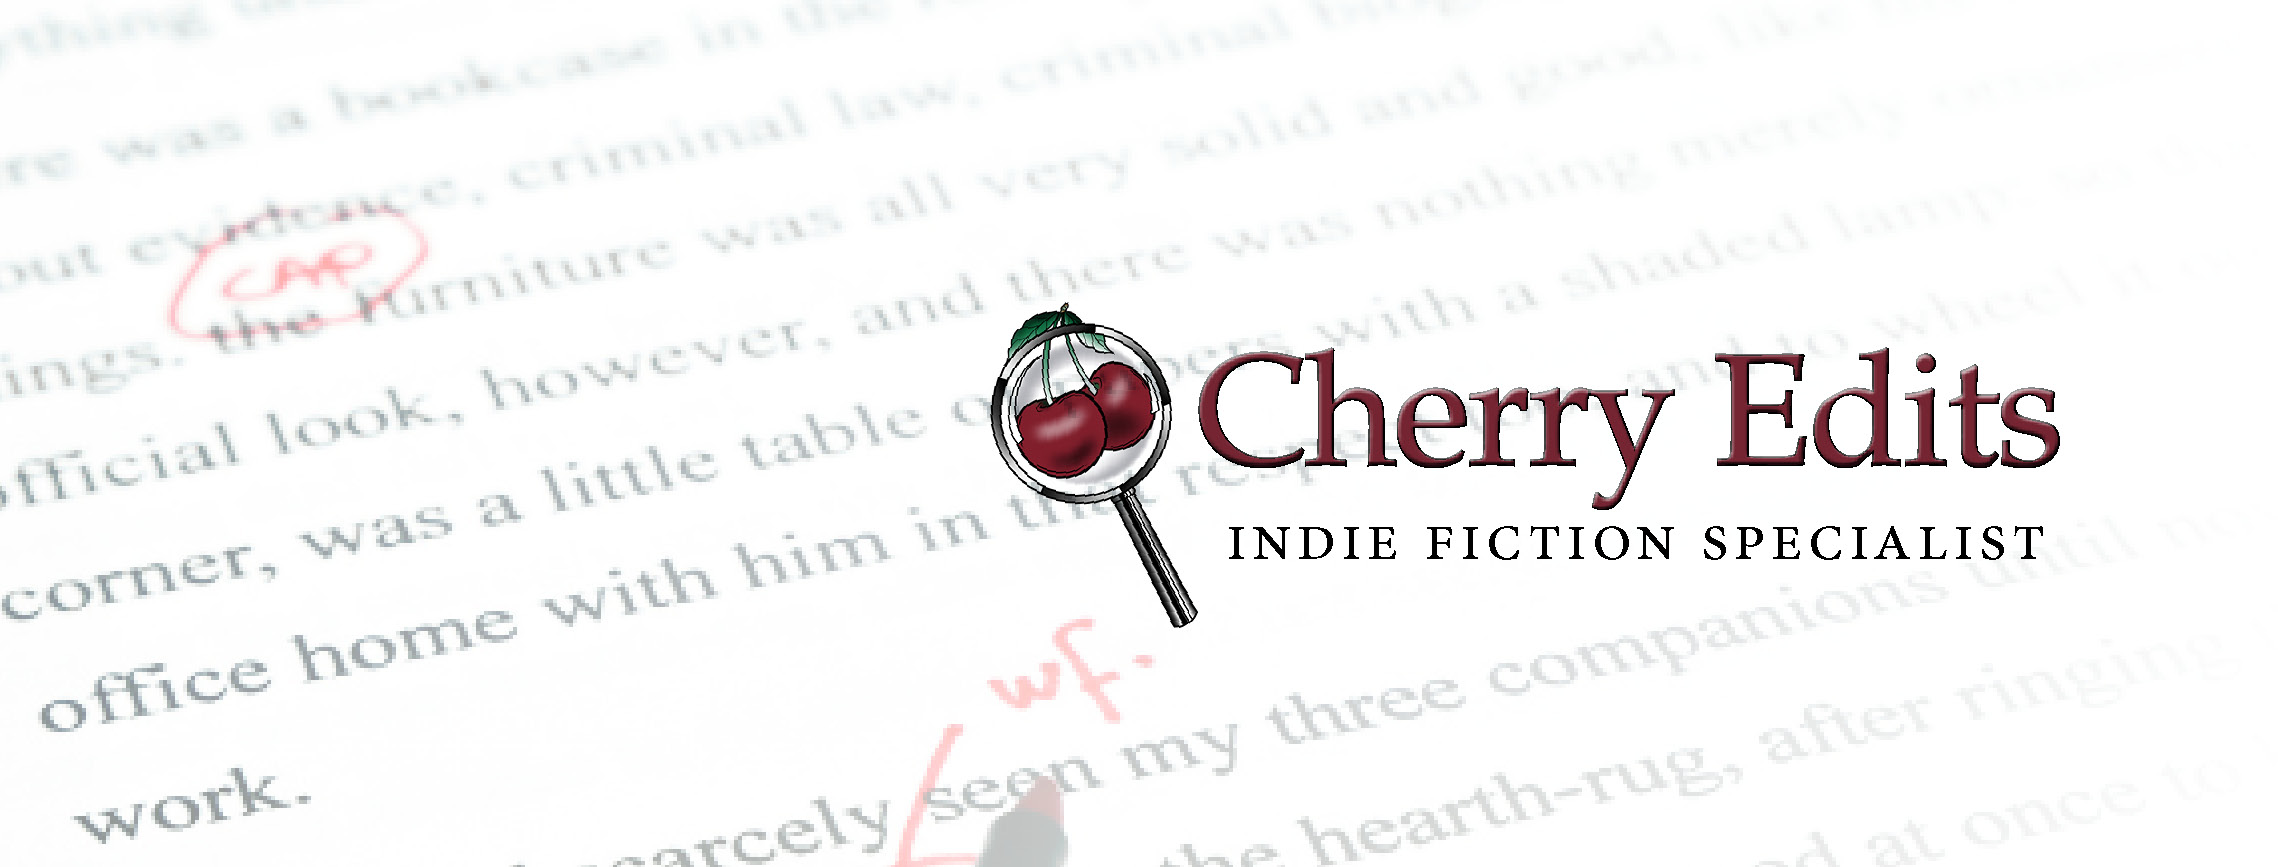 Cherry Edits logo